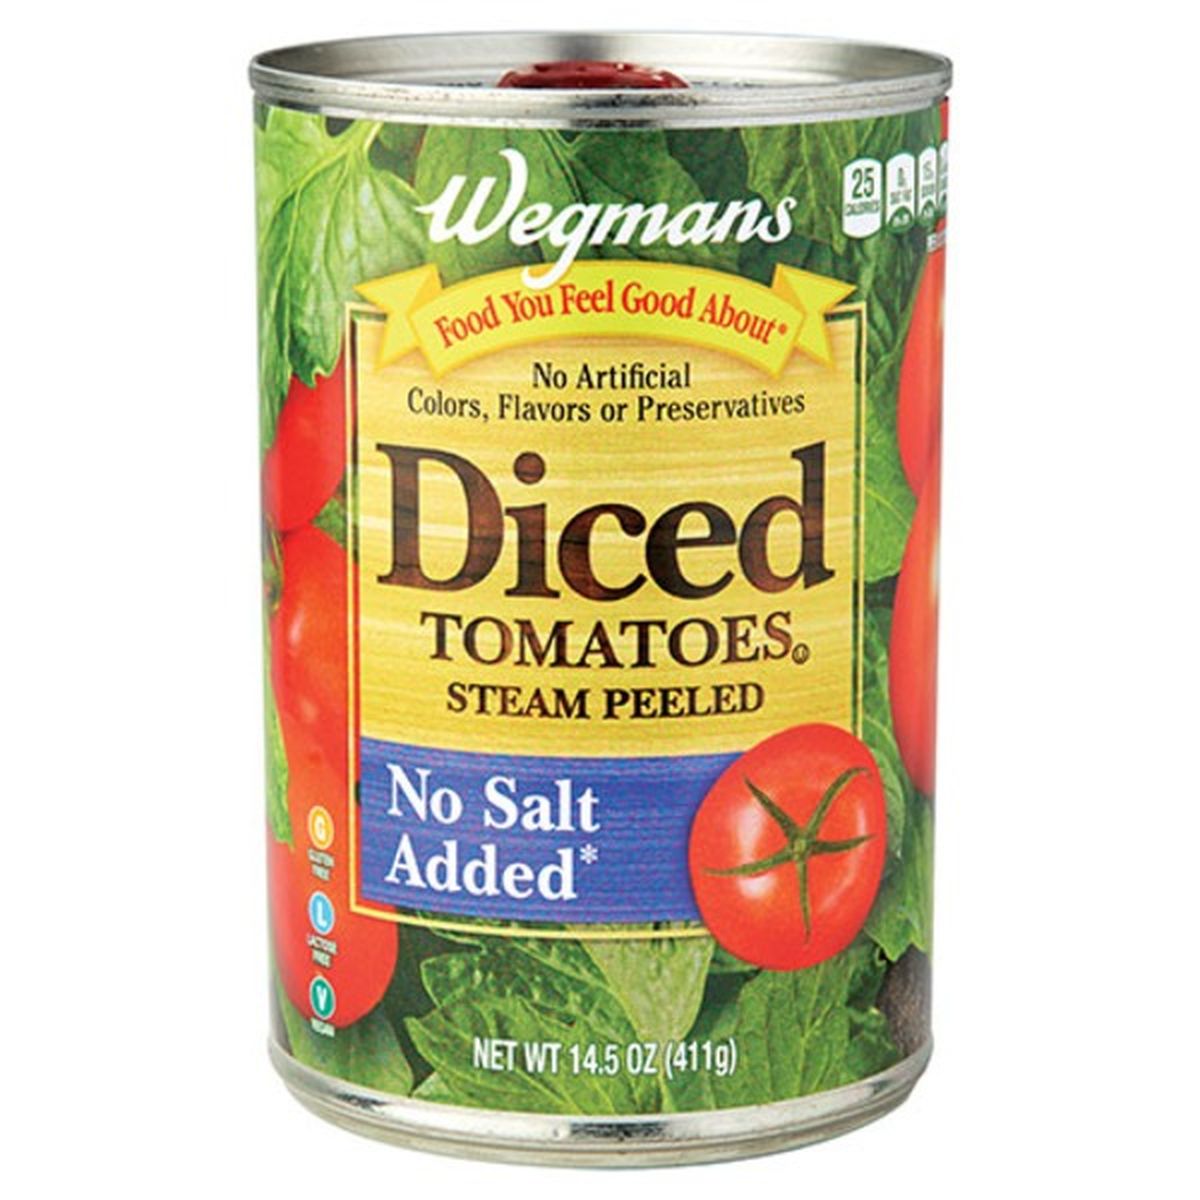 Calories in Wegmans Diced No Salt Added Tomatoes